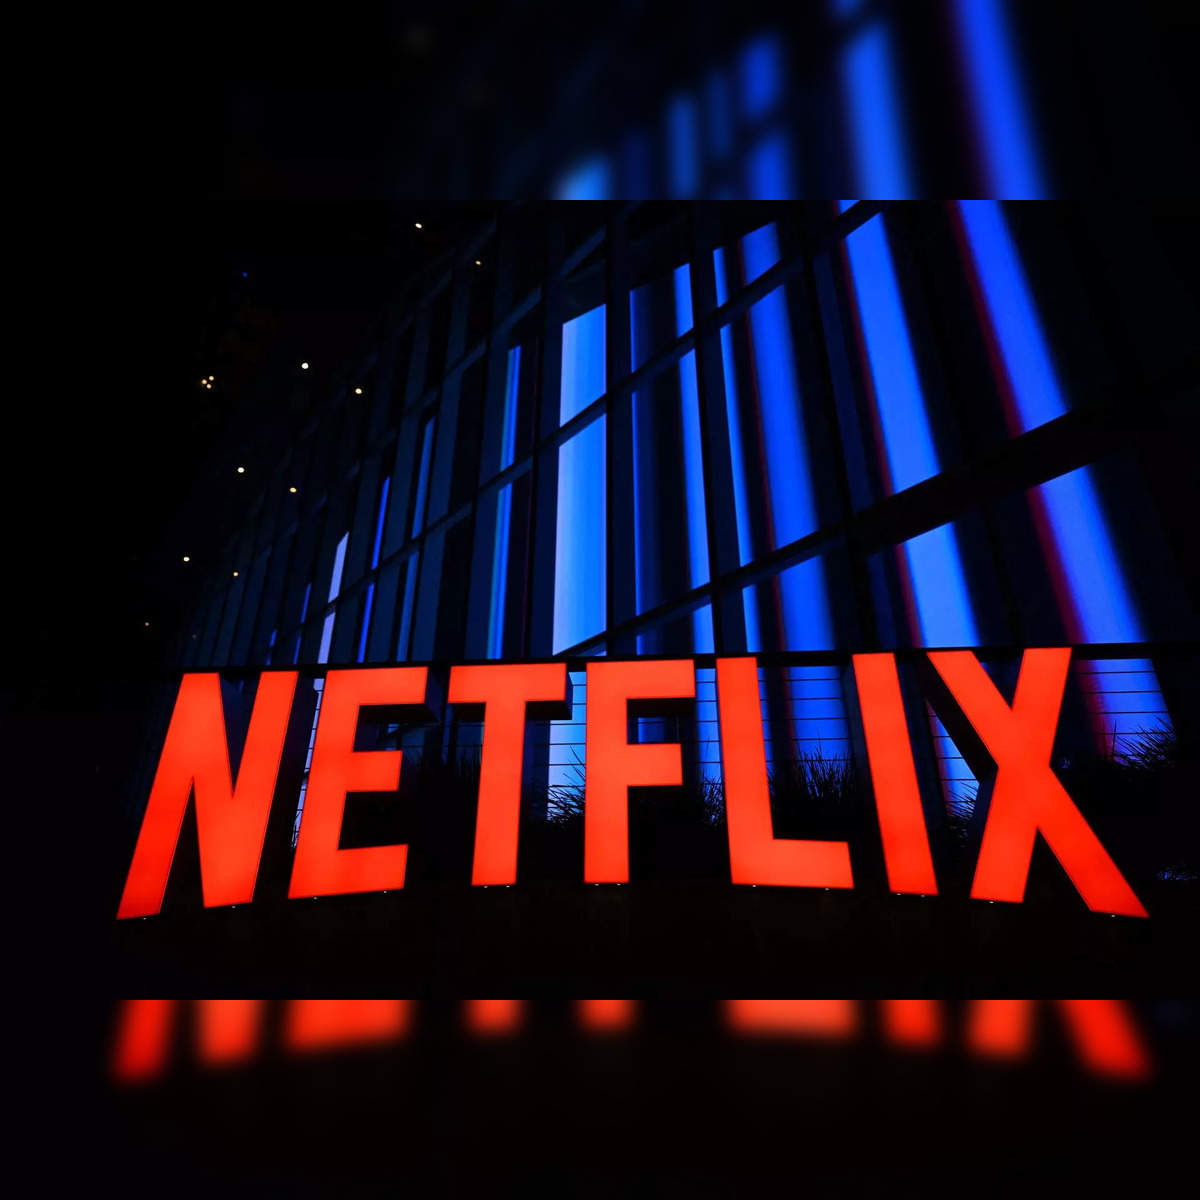 New Movies Coming to Netflix in 2022 - Netflix Tudum